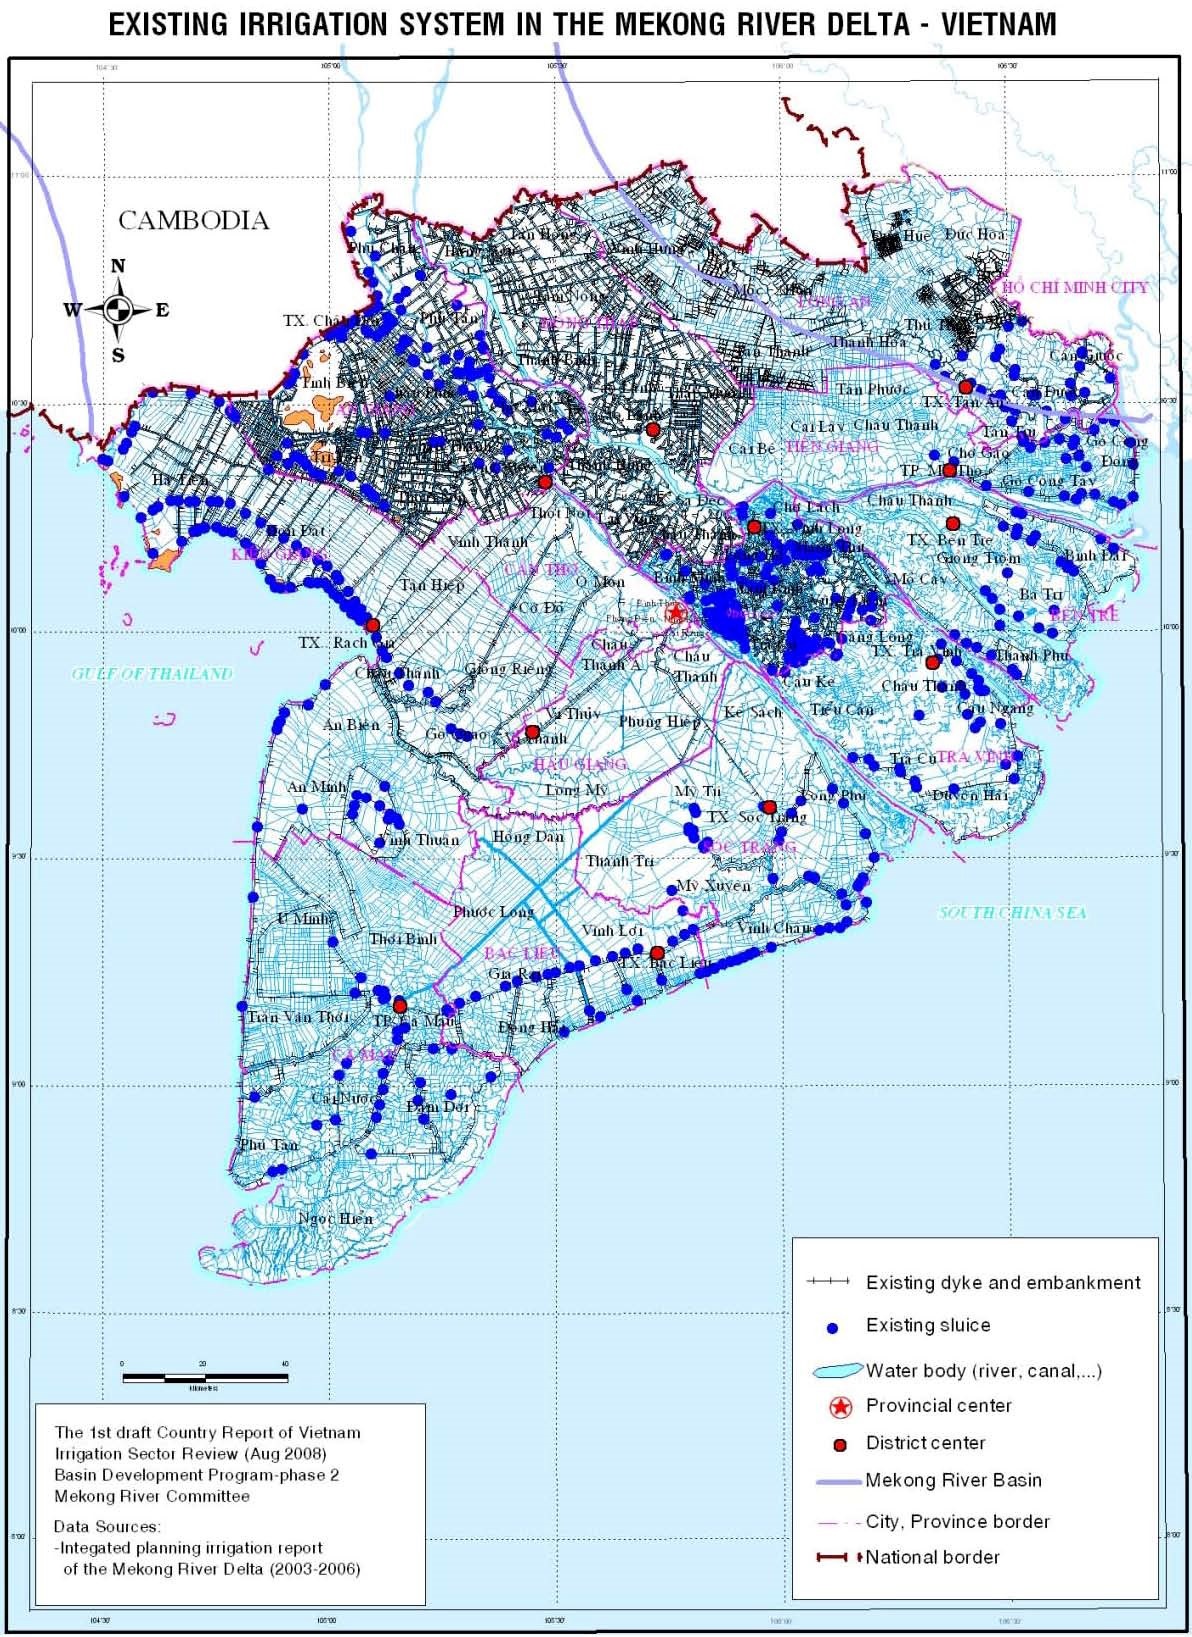 existing irrigation system in the mekong river delte vietnam, đồng bằng sông cửu long hạn hán, mekong river delta, Hệ thống thủy lợi ở Đồng bằng sông Cửu Long [19] 